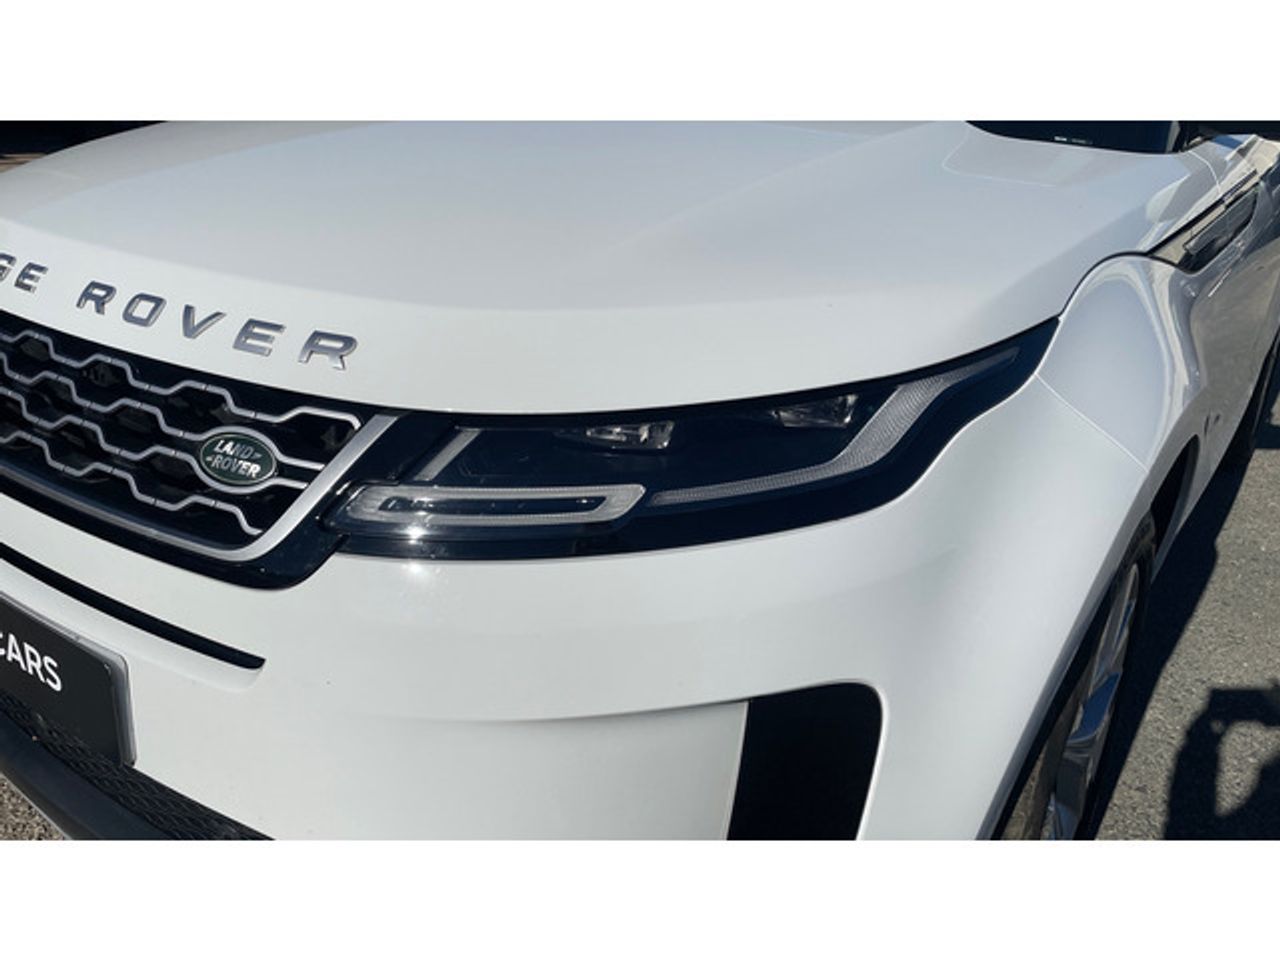 Foto Land-Rover Range Rover Evoque 24